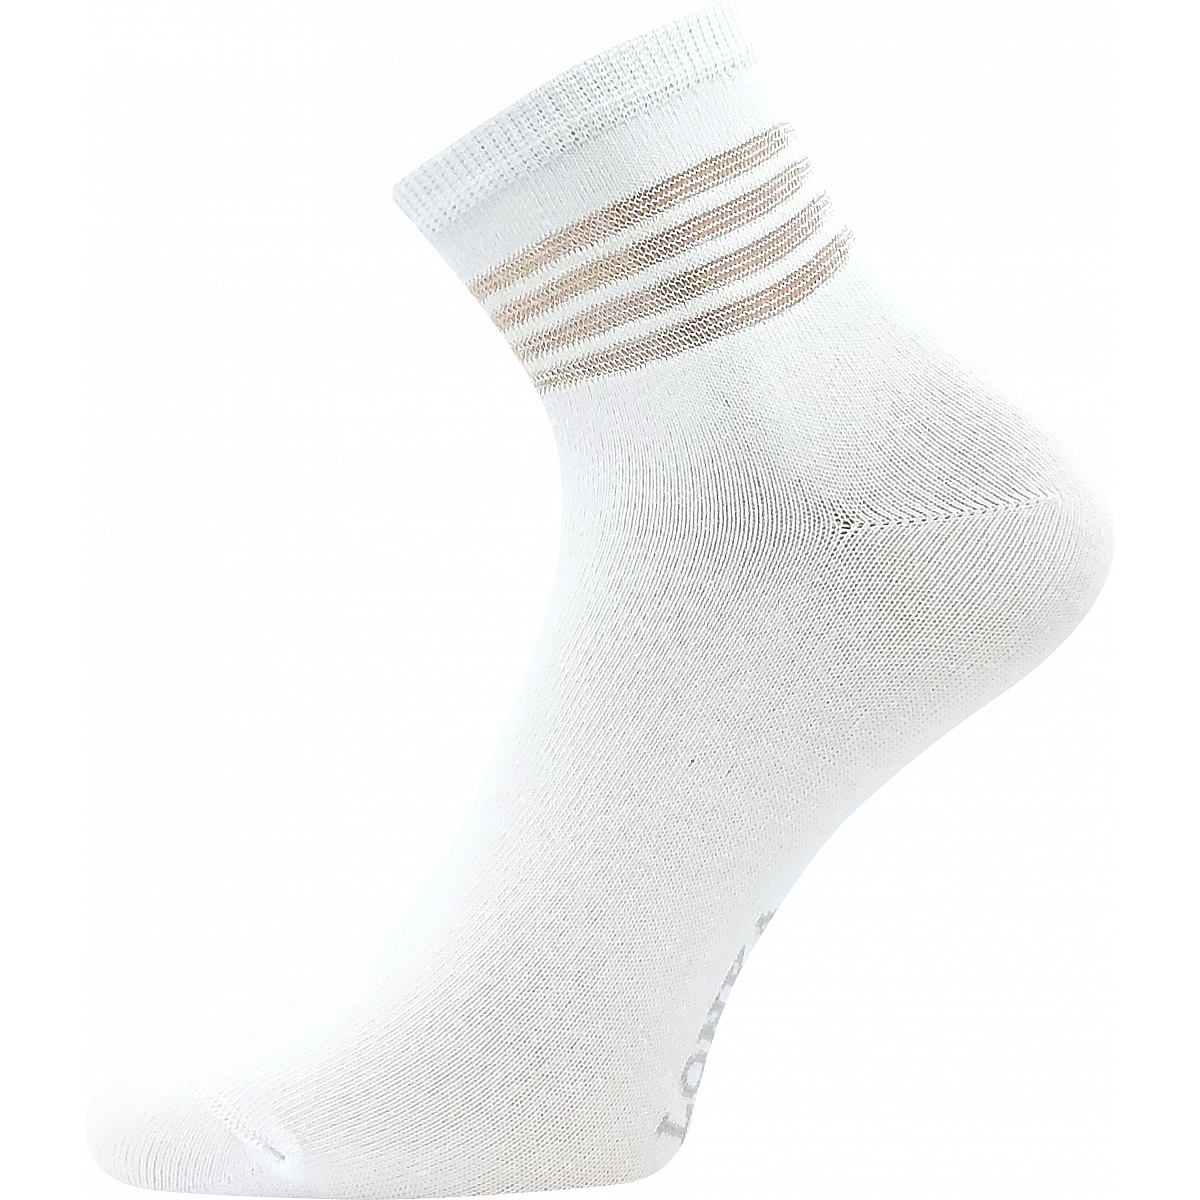 Ponožky dámské Lonka Fasketa - bílé, 35-38